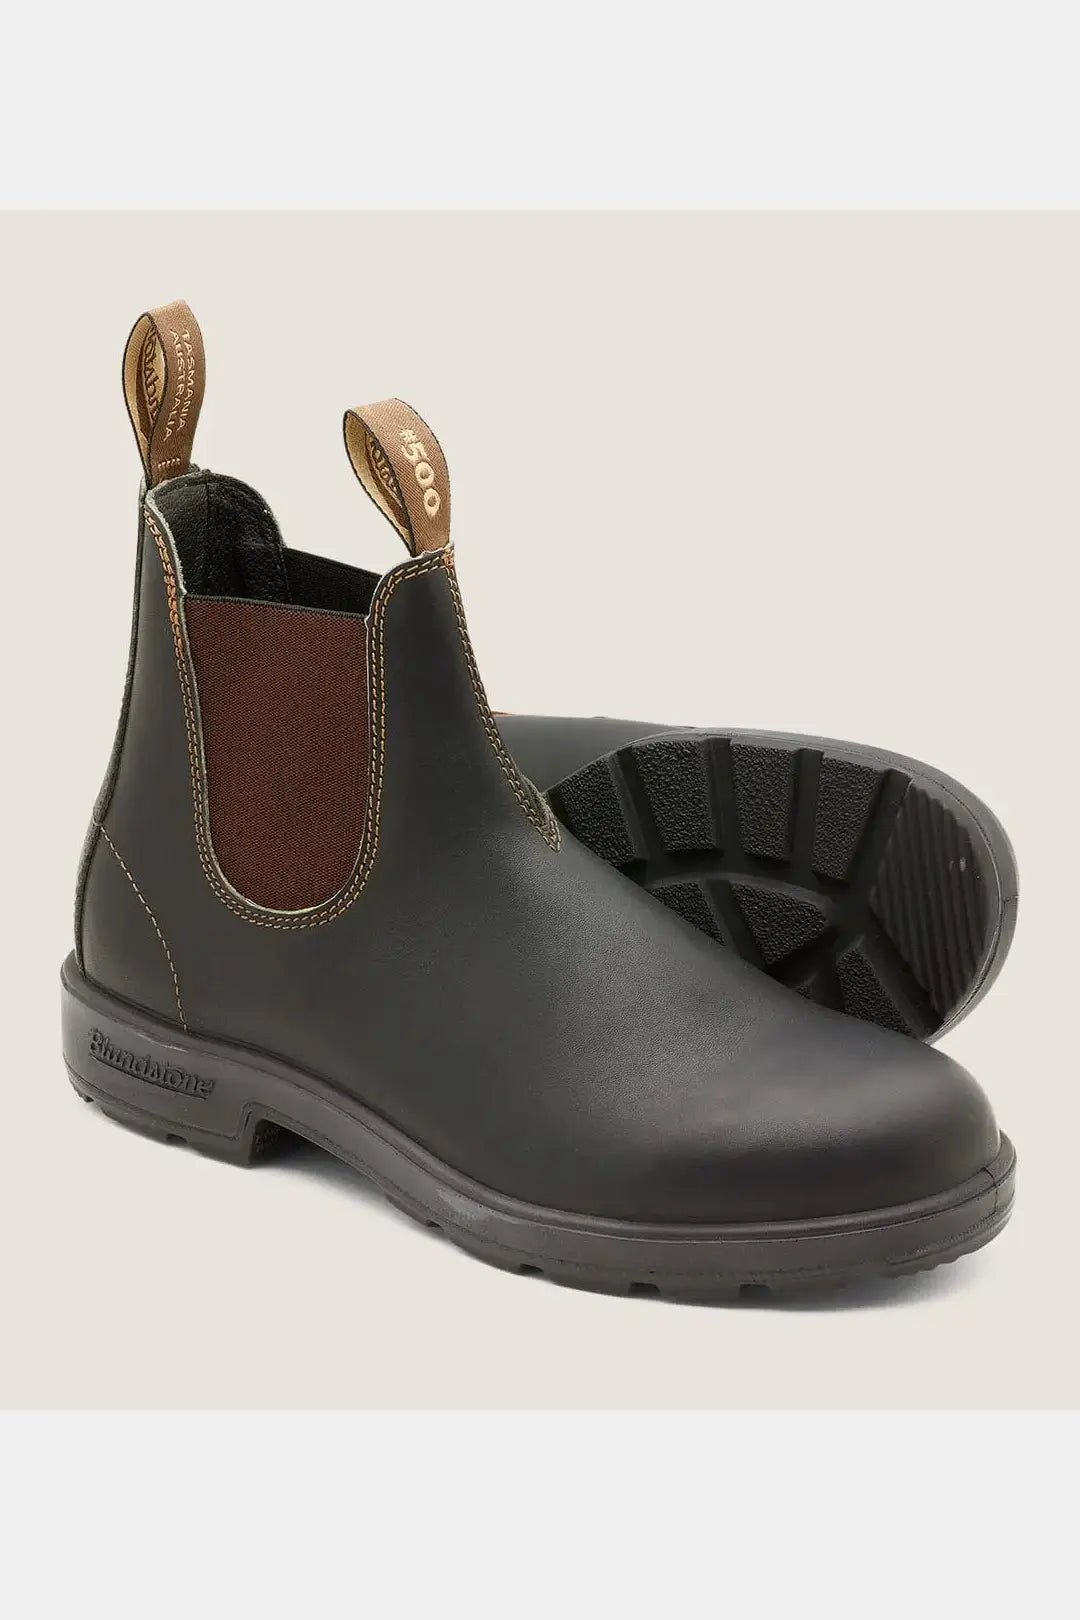 Blundstone 500 originals chelsea boots - stout brown